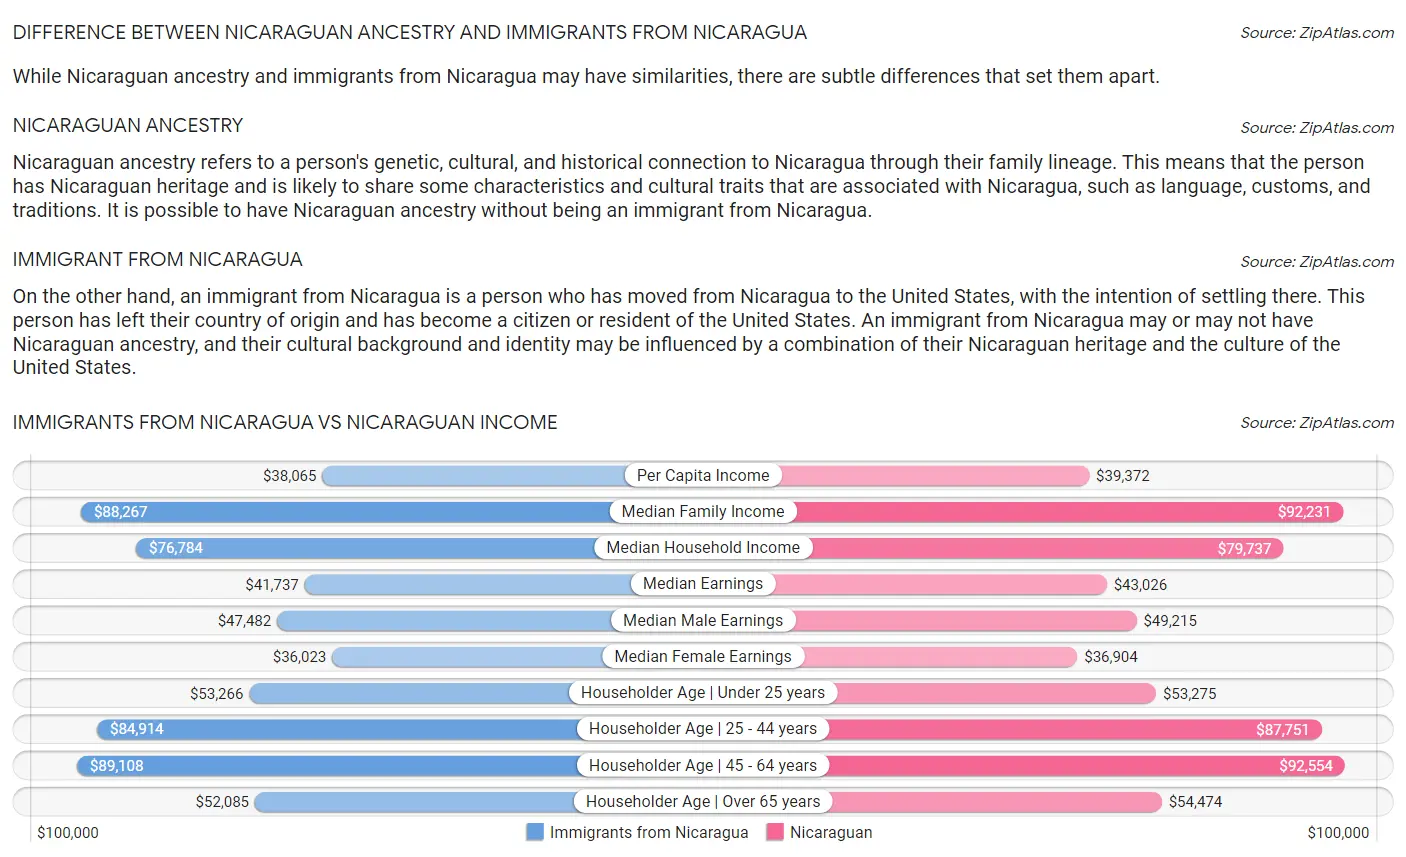 Immigrants from Nicaragua vs Nicaraguan Income